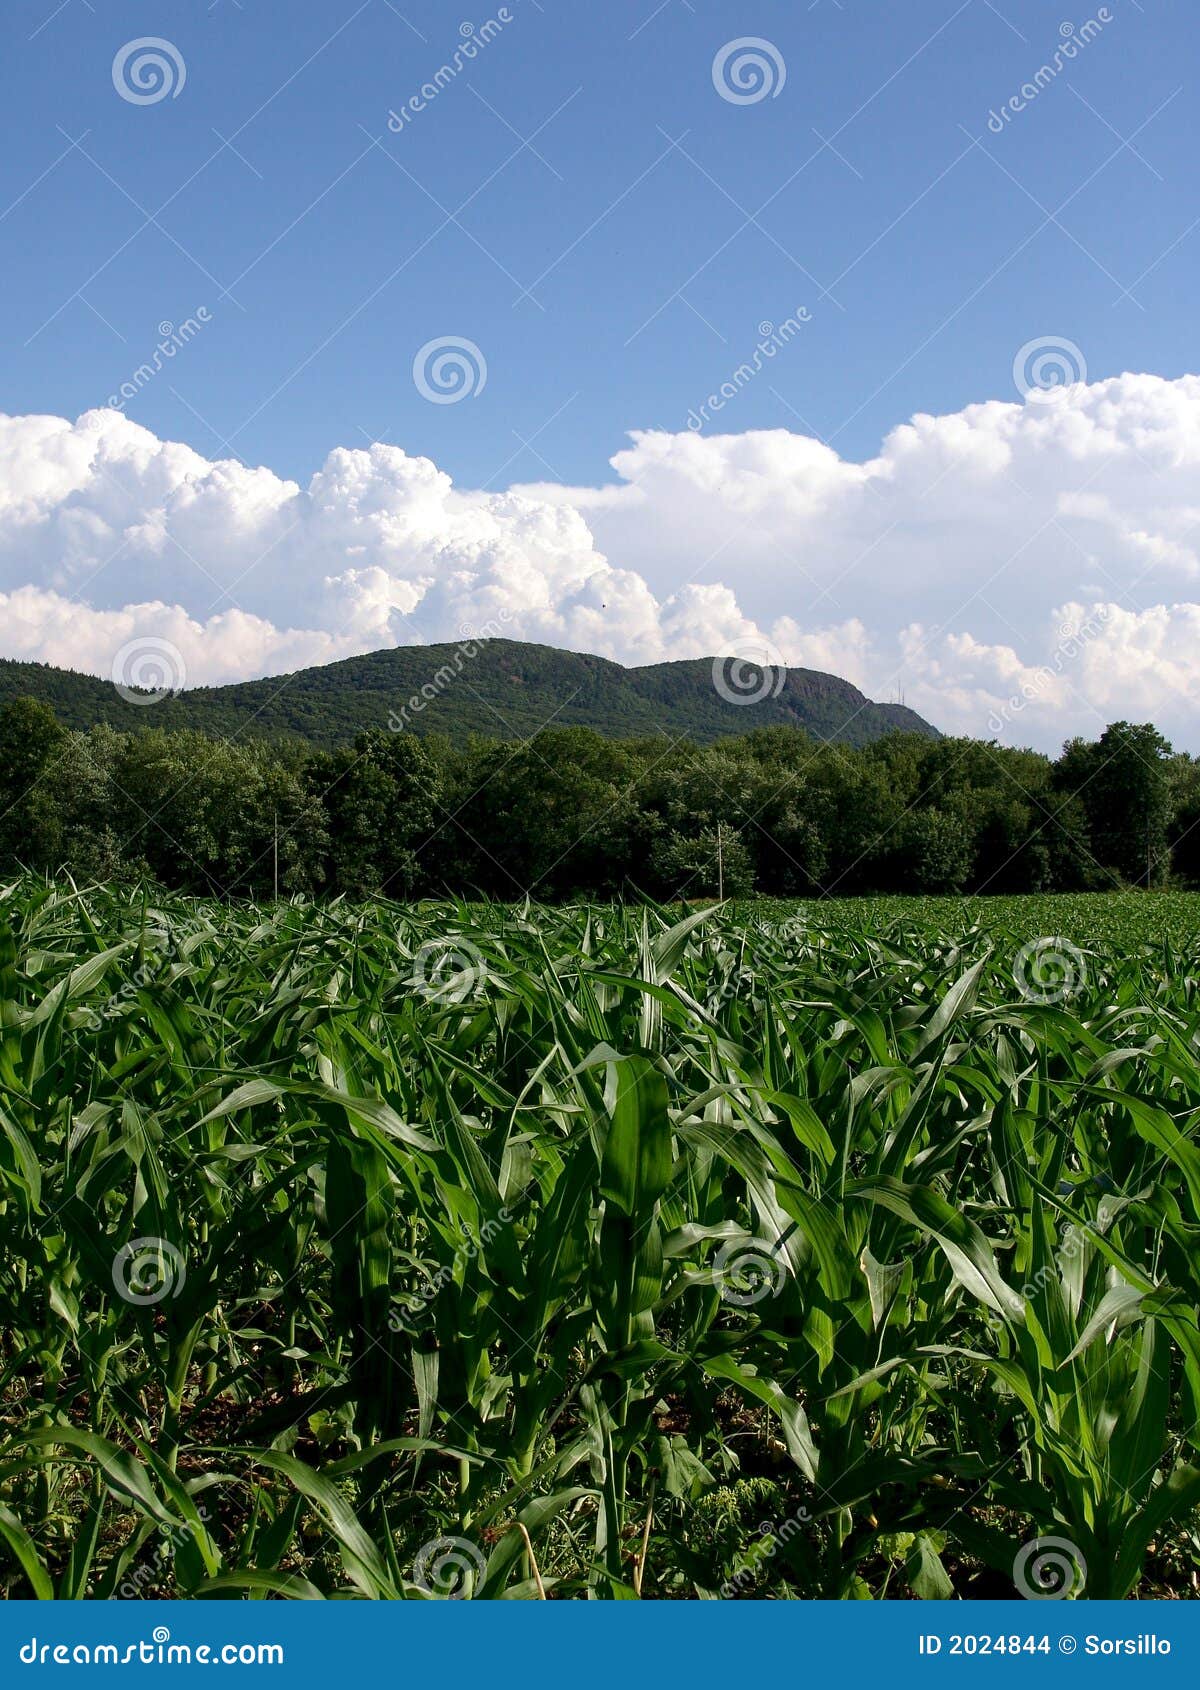 young corn plants massachusetts